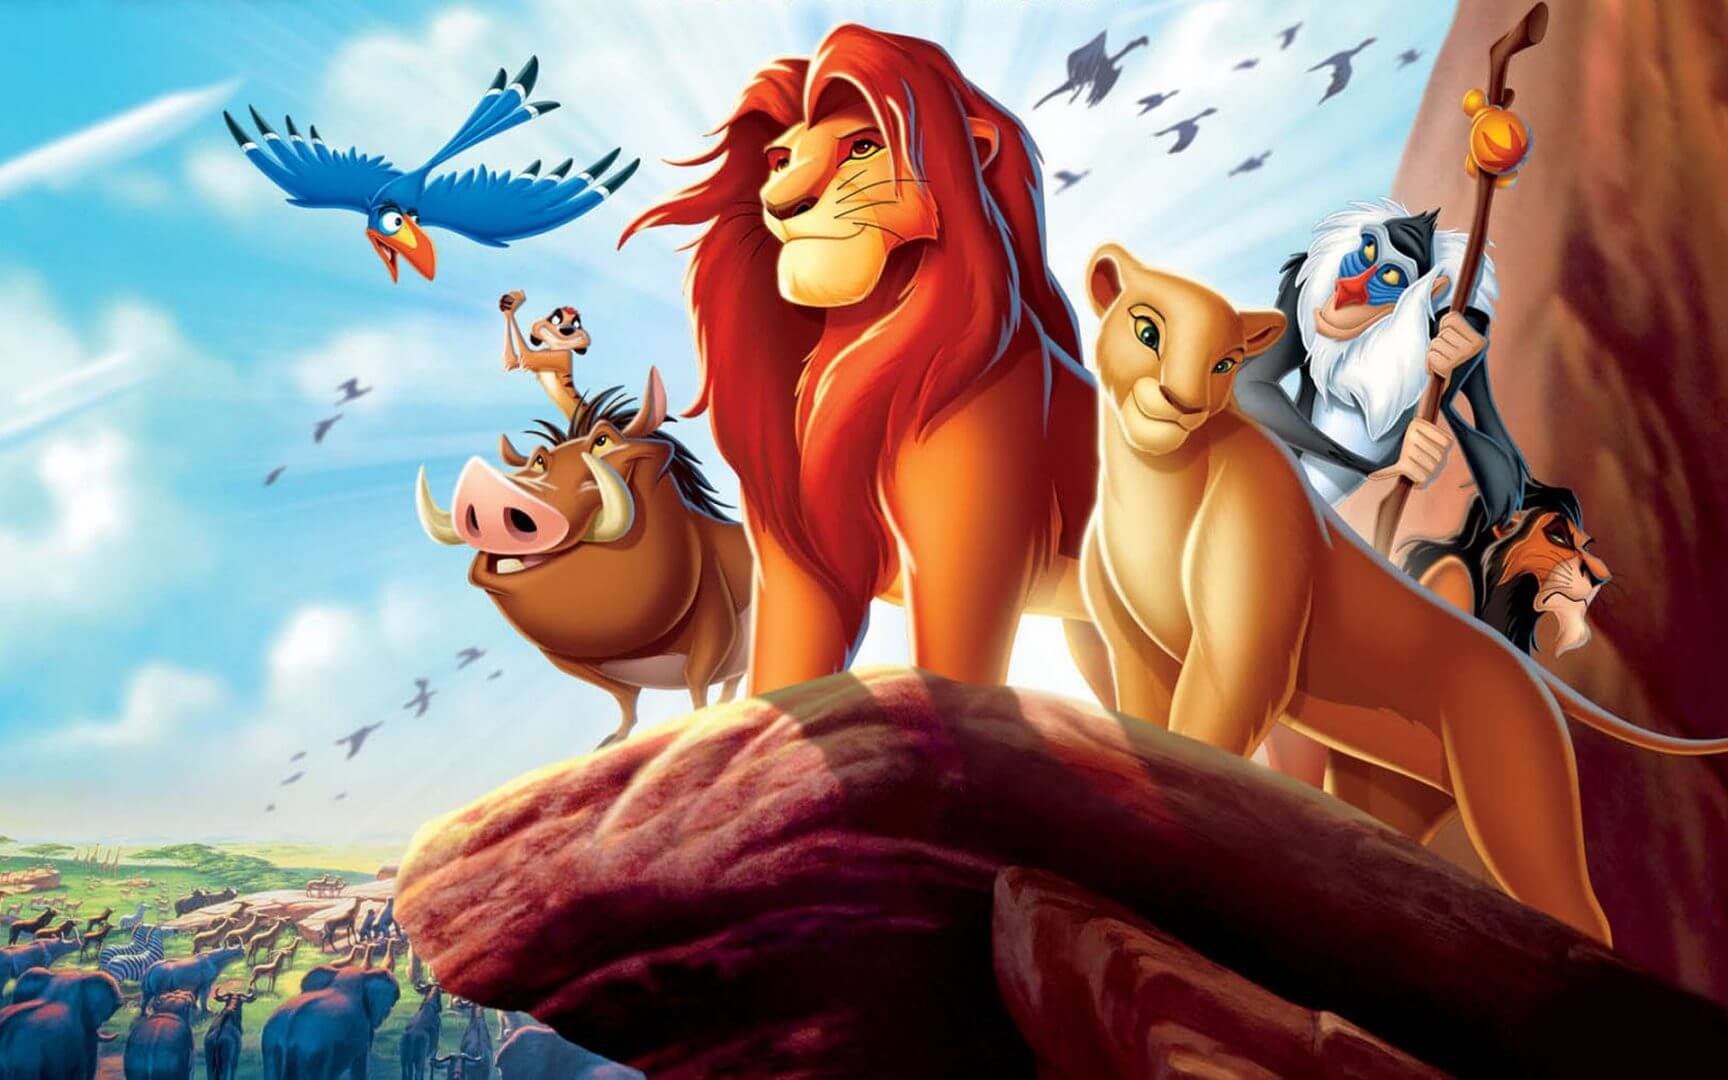 Lion King Remake Heading Forward Fast, Directed by Jon Favreau